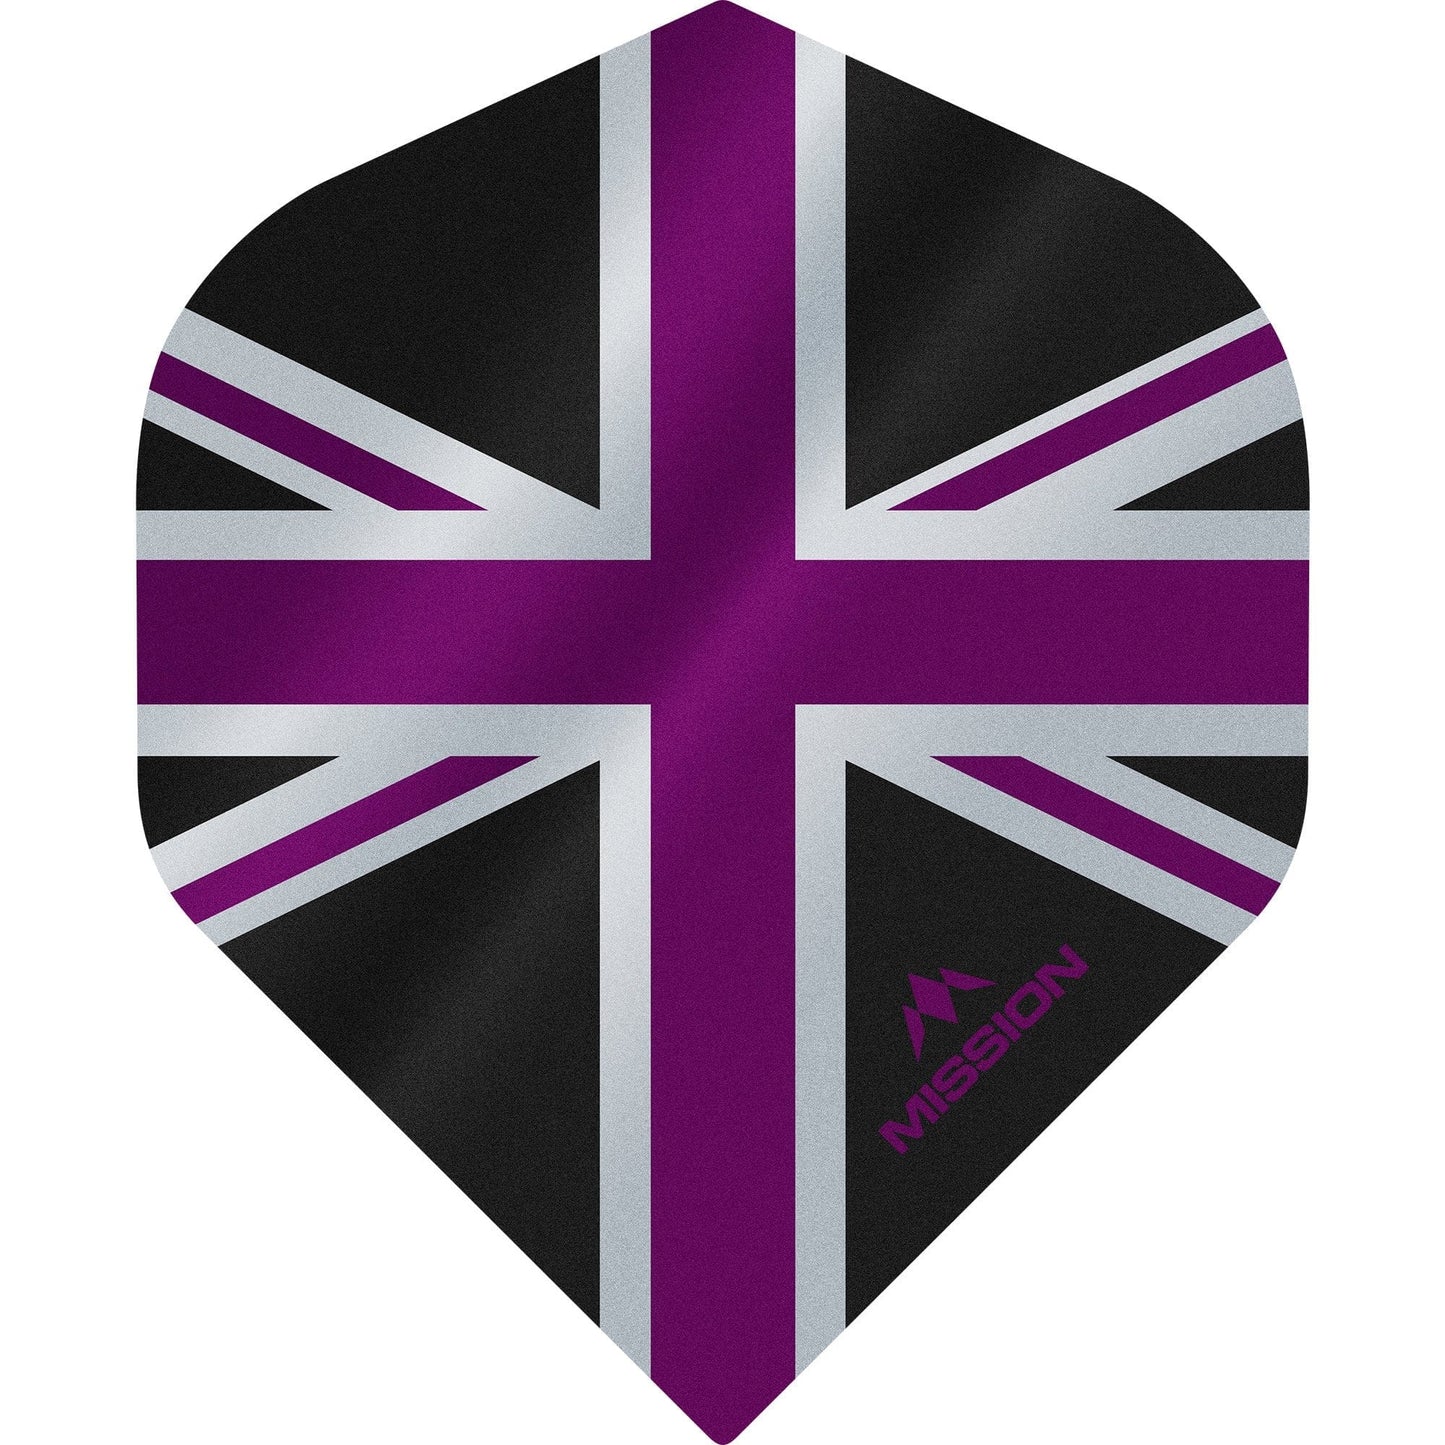 Mission Alliance Union Jack Dart Flights - No2 - Std - Black Black Purple